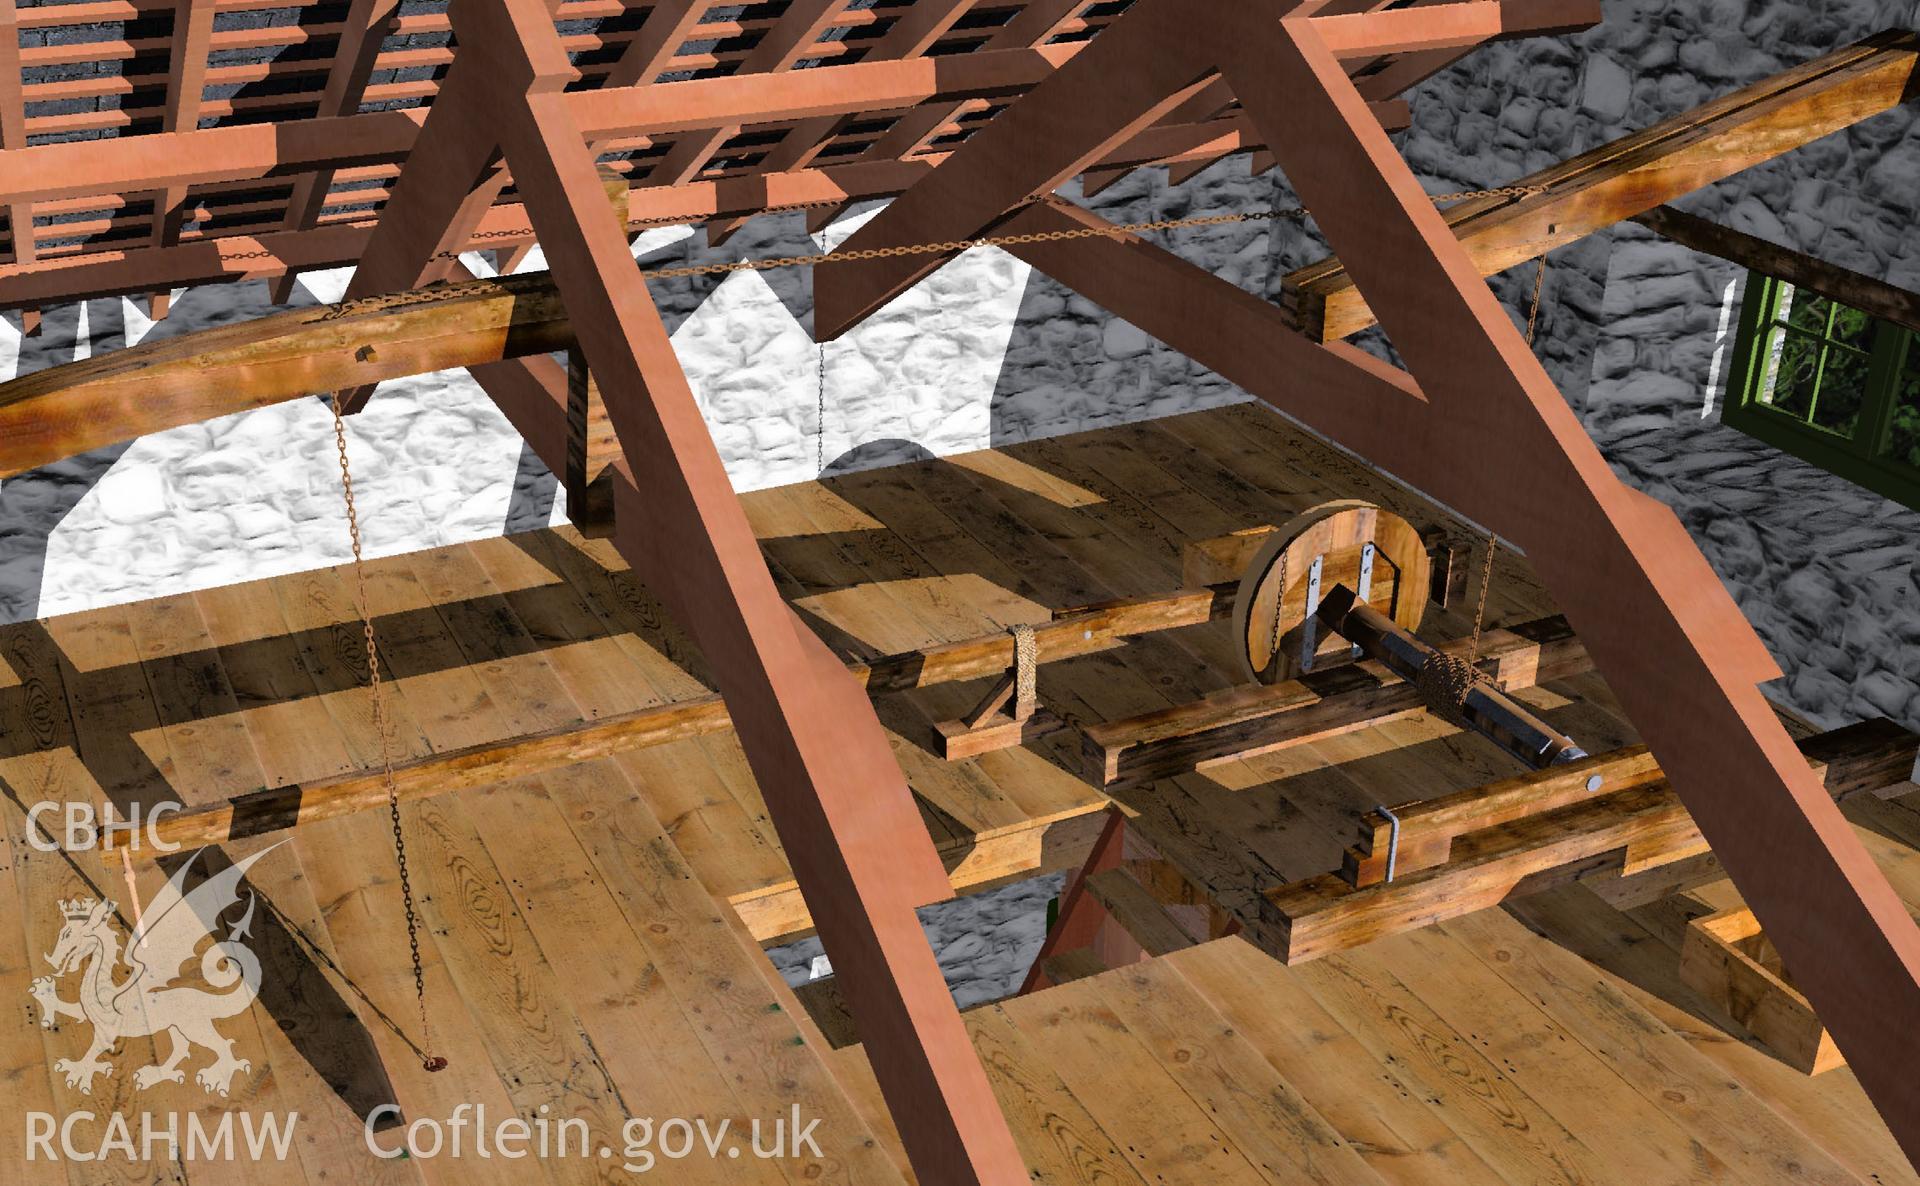 Digital 3D drawing relating to Cenarth mill.